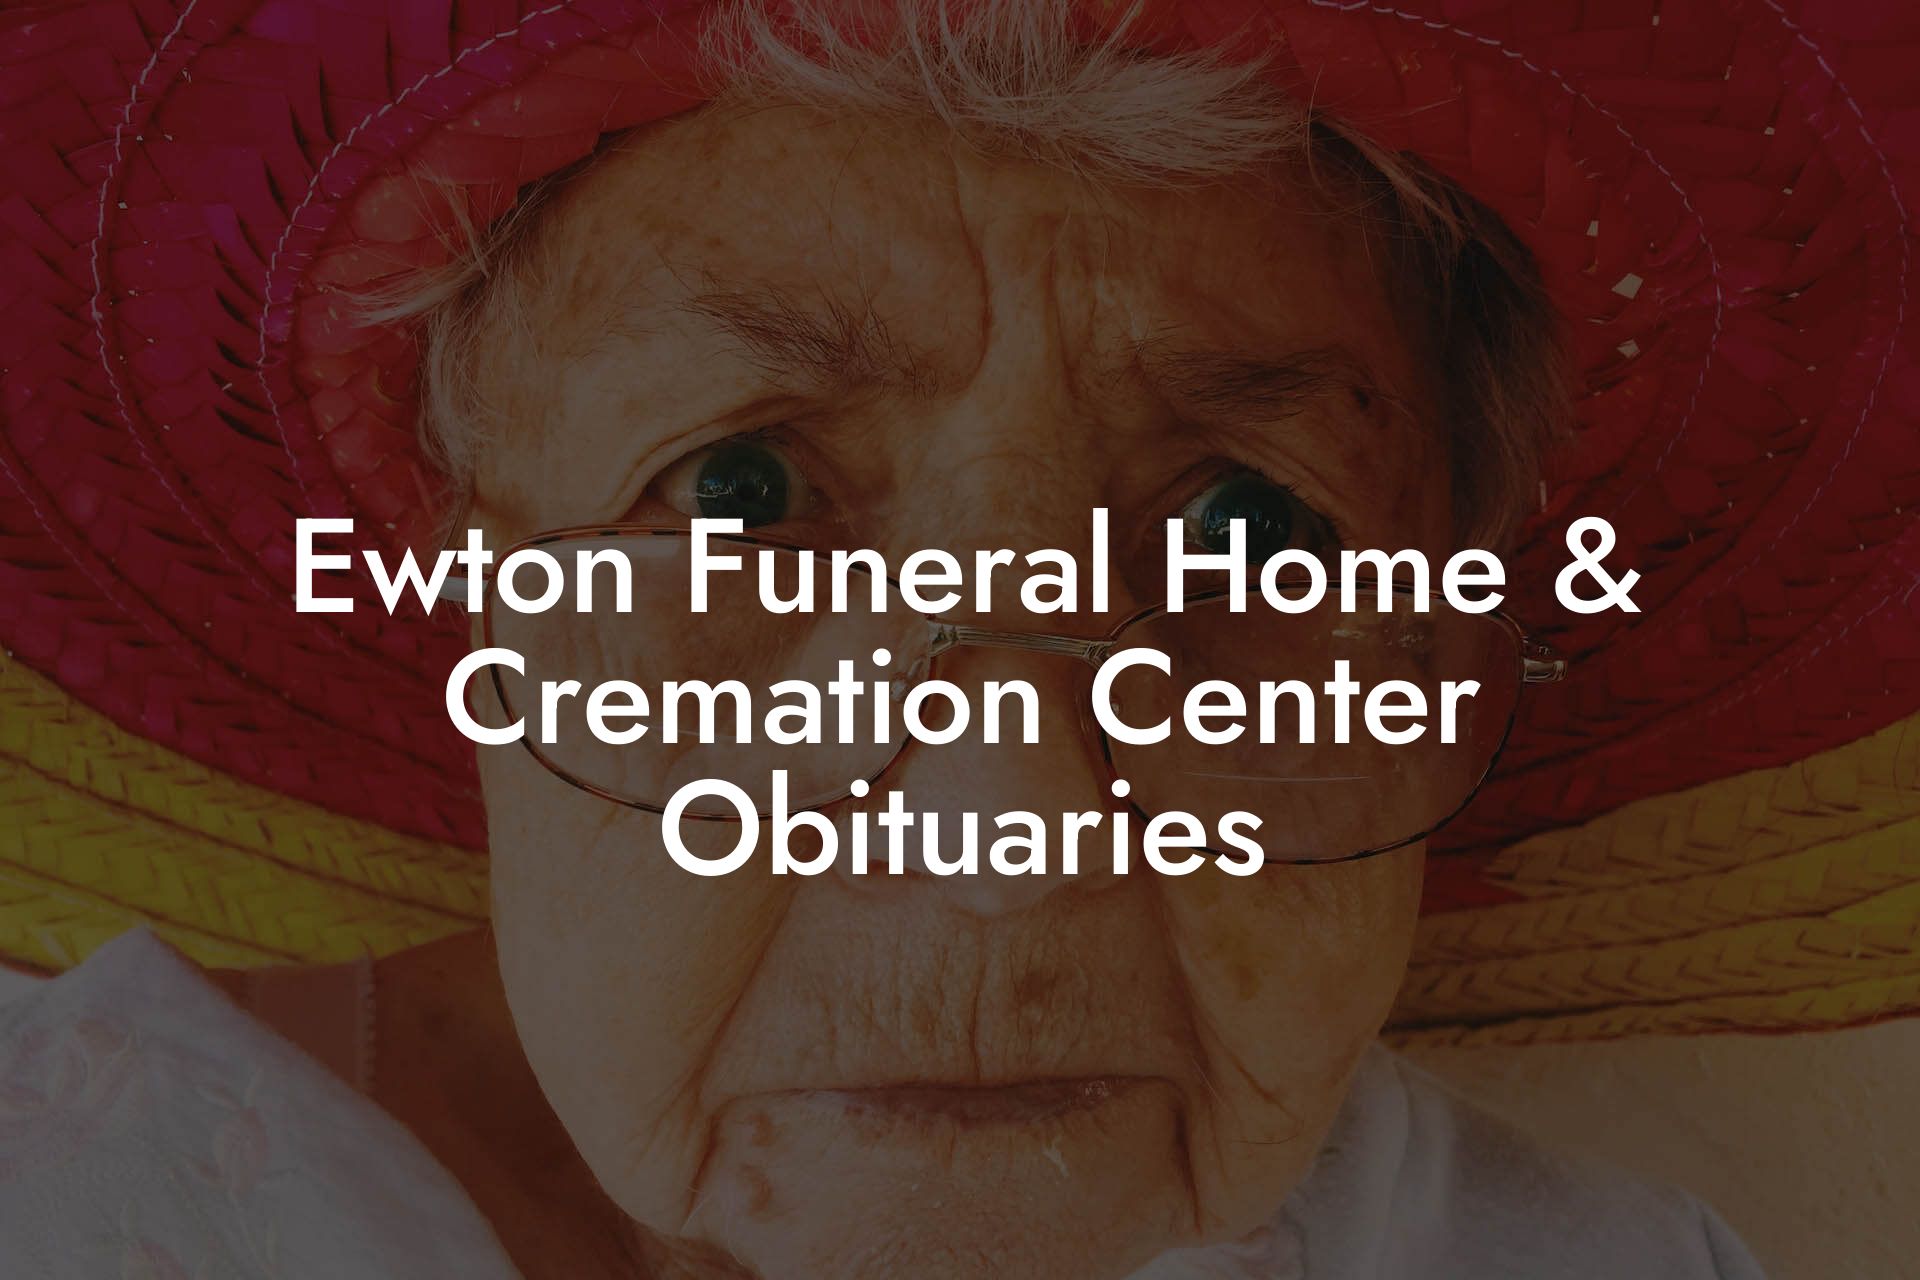 Ewton Funeral Home & Cremation Center Obituaries